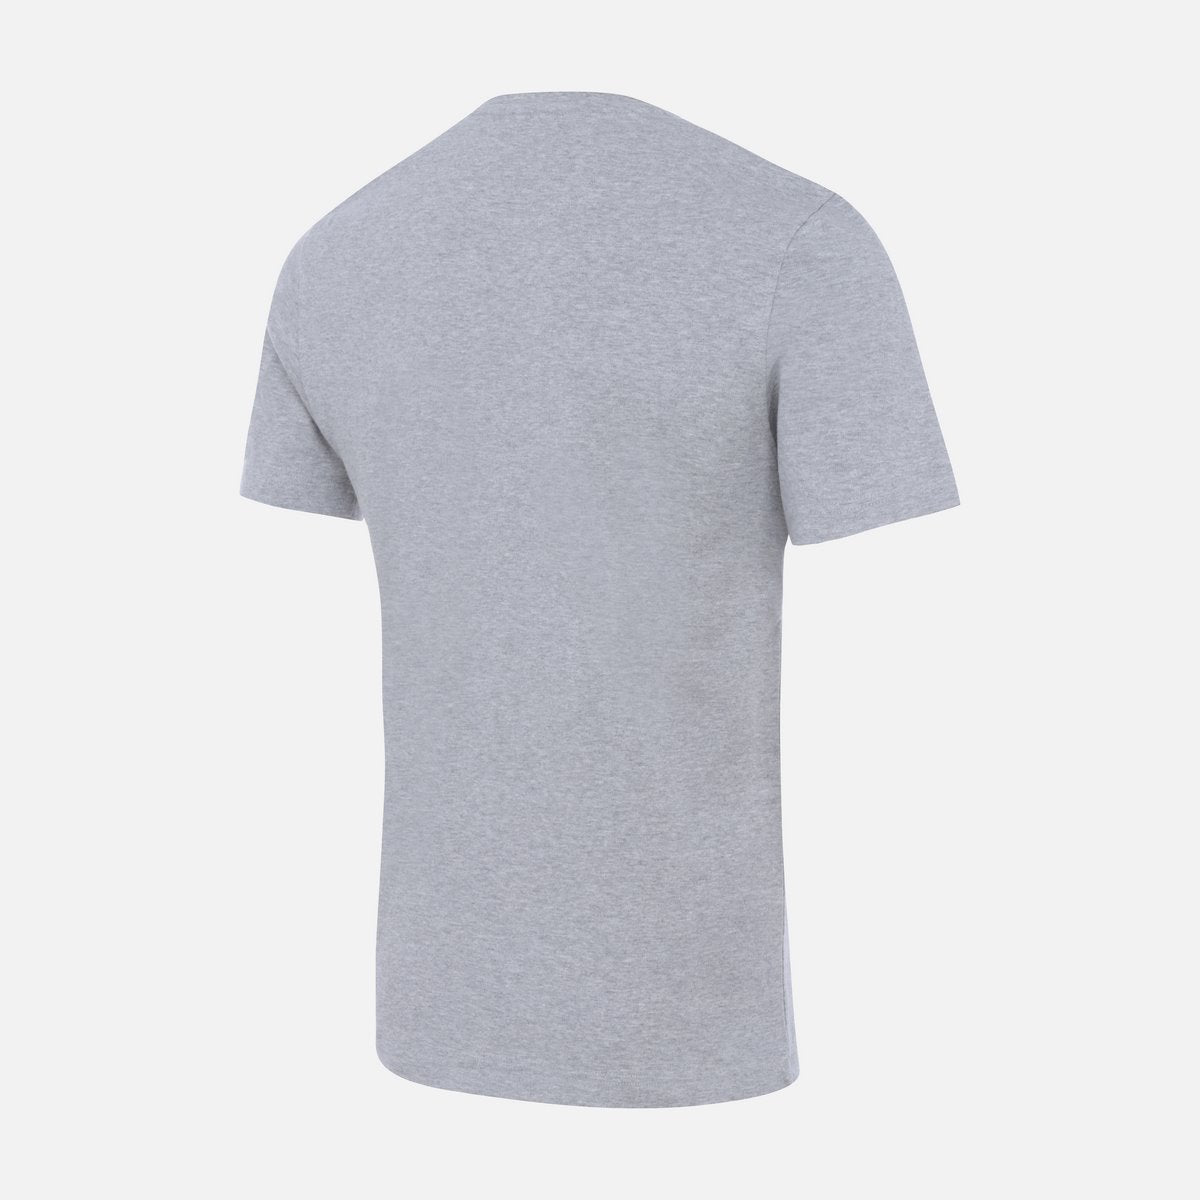 FK Basic T-Shirt - Gray